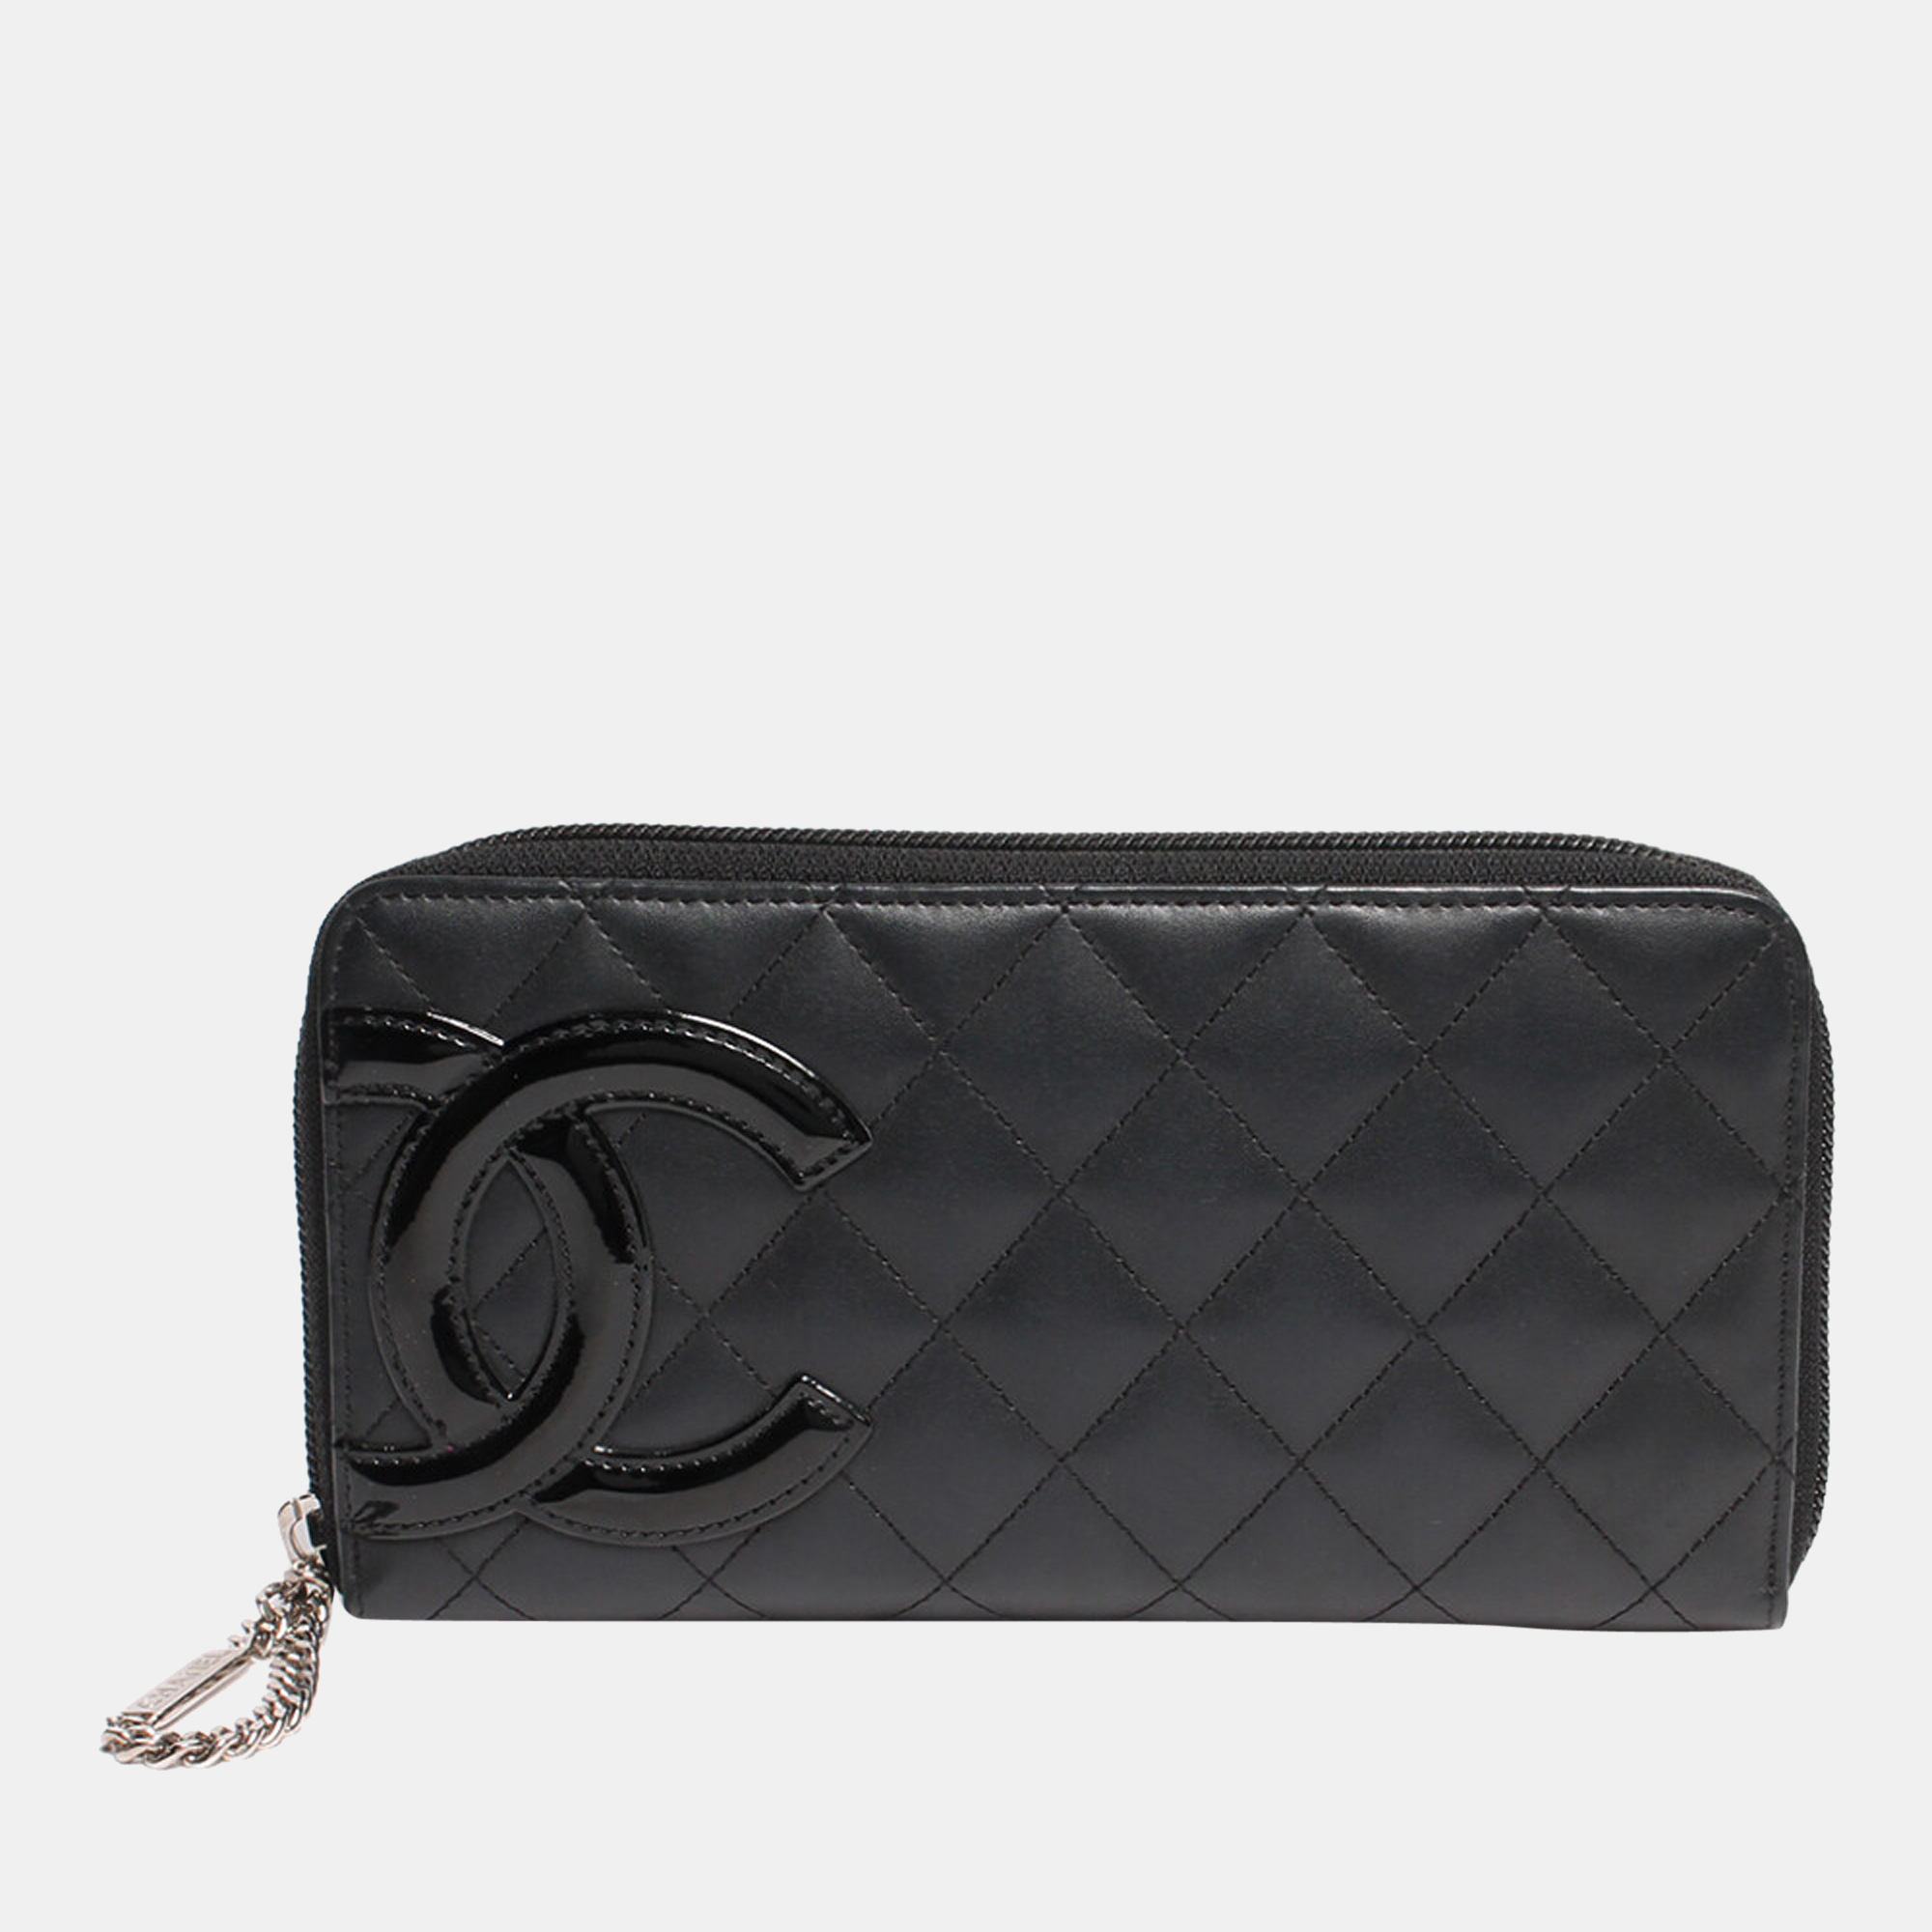 Chanel Black Leather Cambon Ligne Wallet